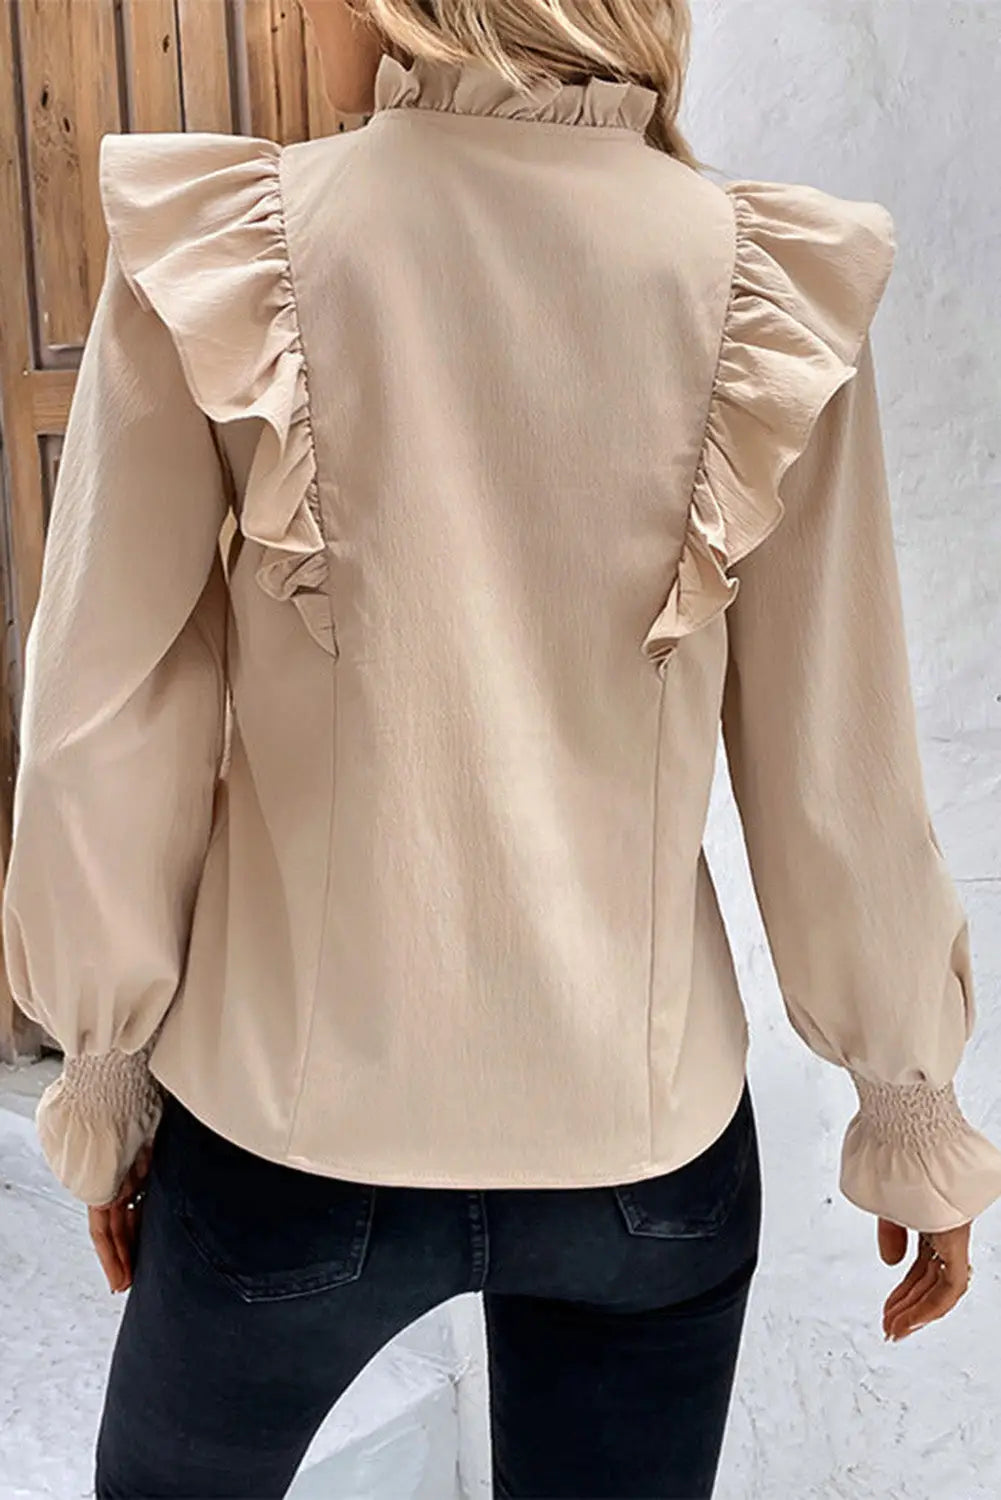 Khaki ruffled lace up bubble sleeve blouse - tops